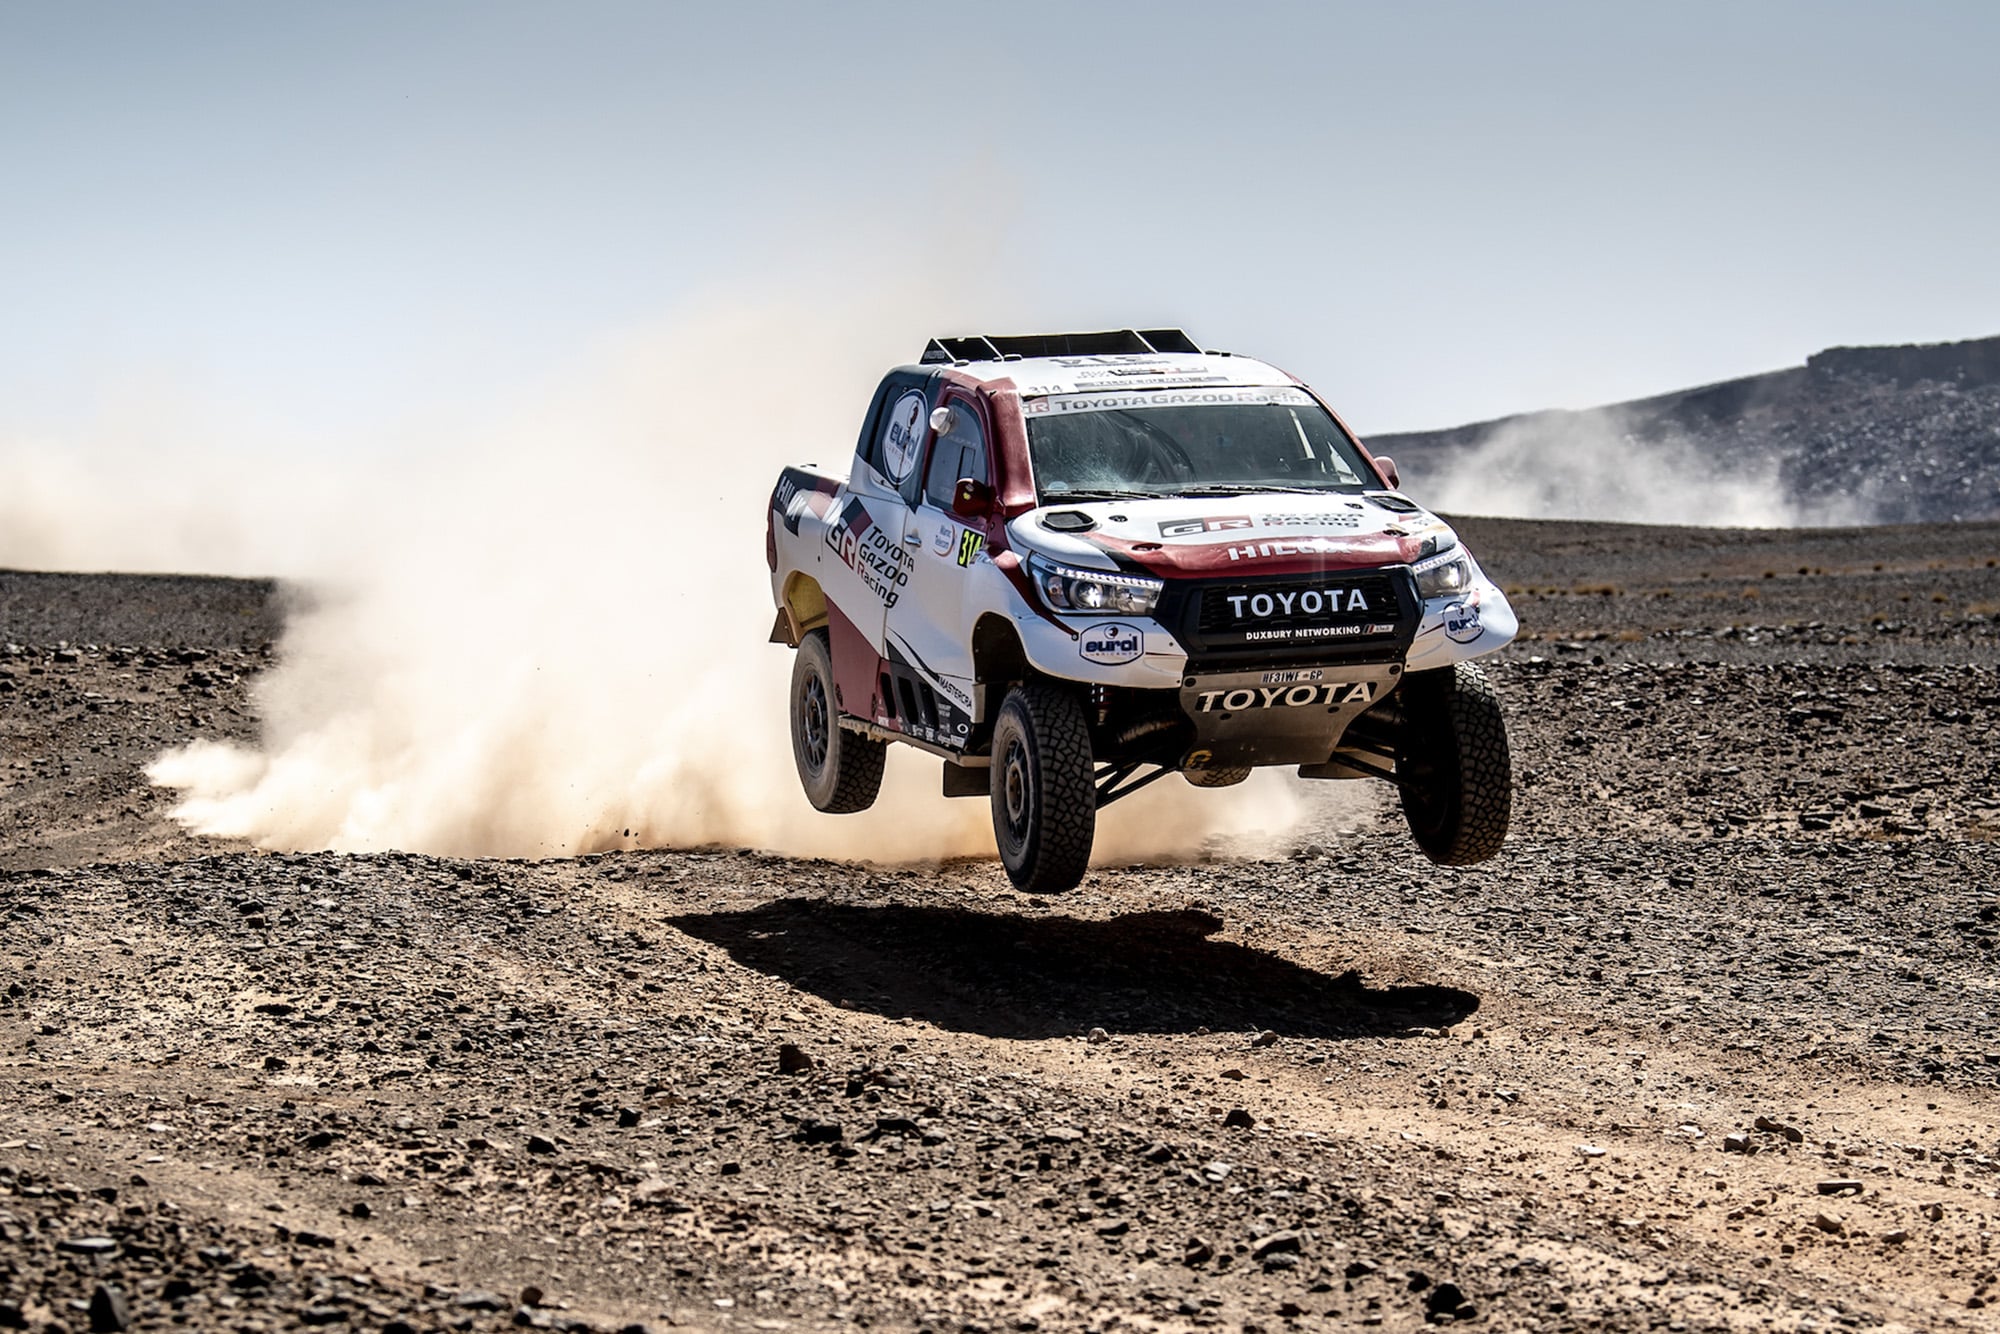 Fernando Alonso's Dakar-spec Toyota Hilix jumping over a rally raid course